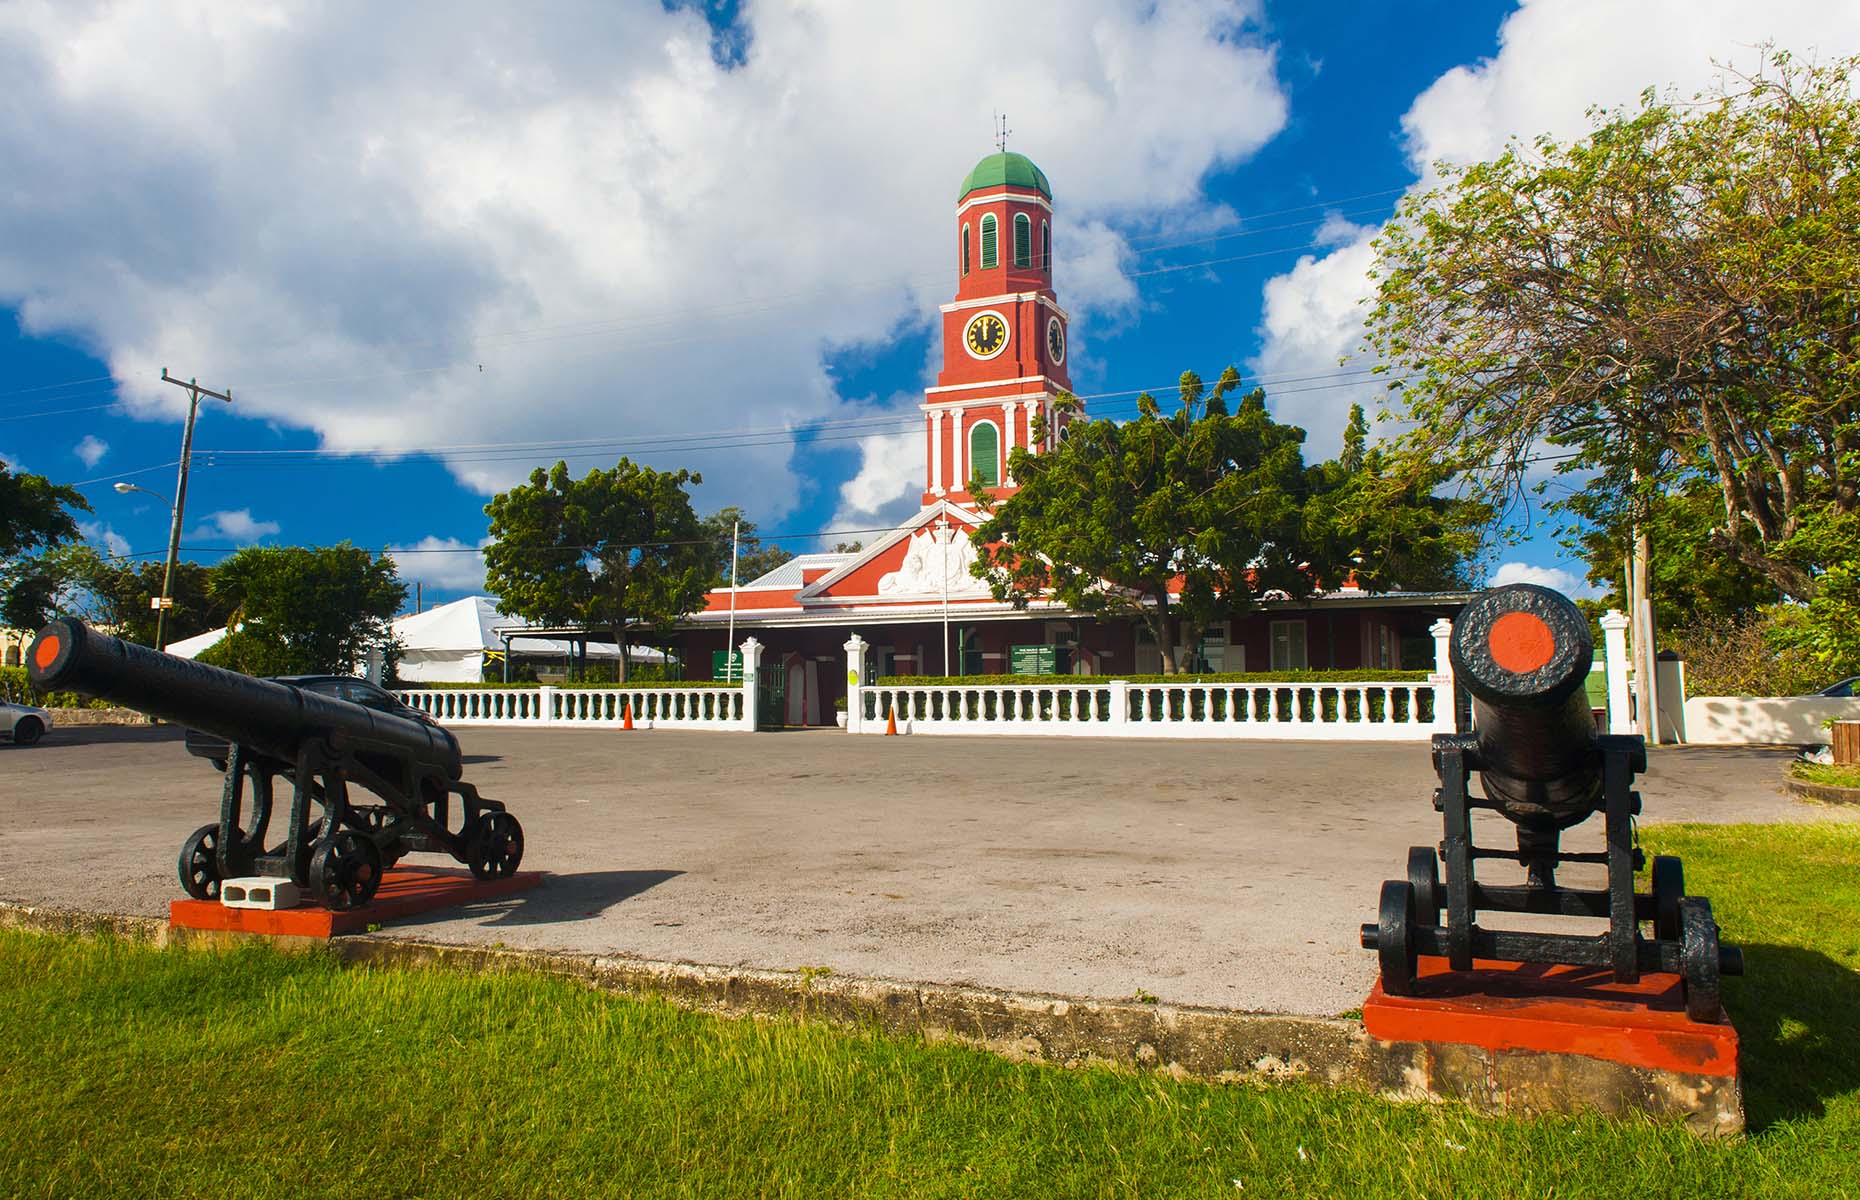 Garrison at Bridgetown, Barbados. (Image: Filip Fuxa/Shutterstock)